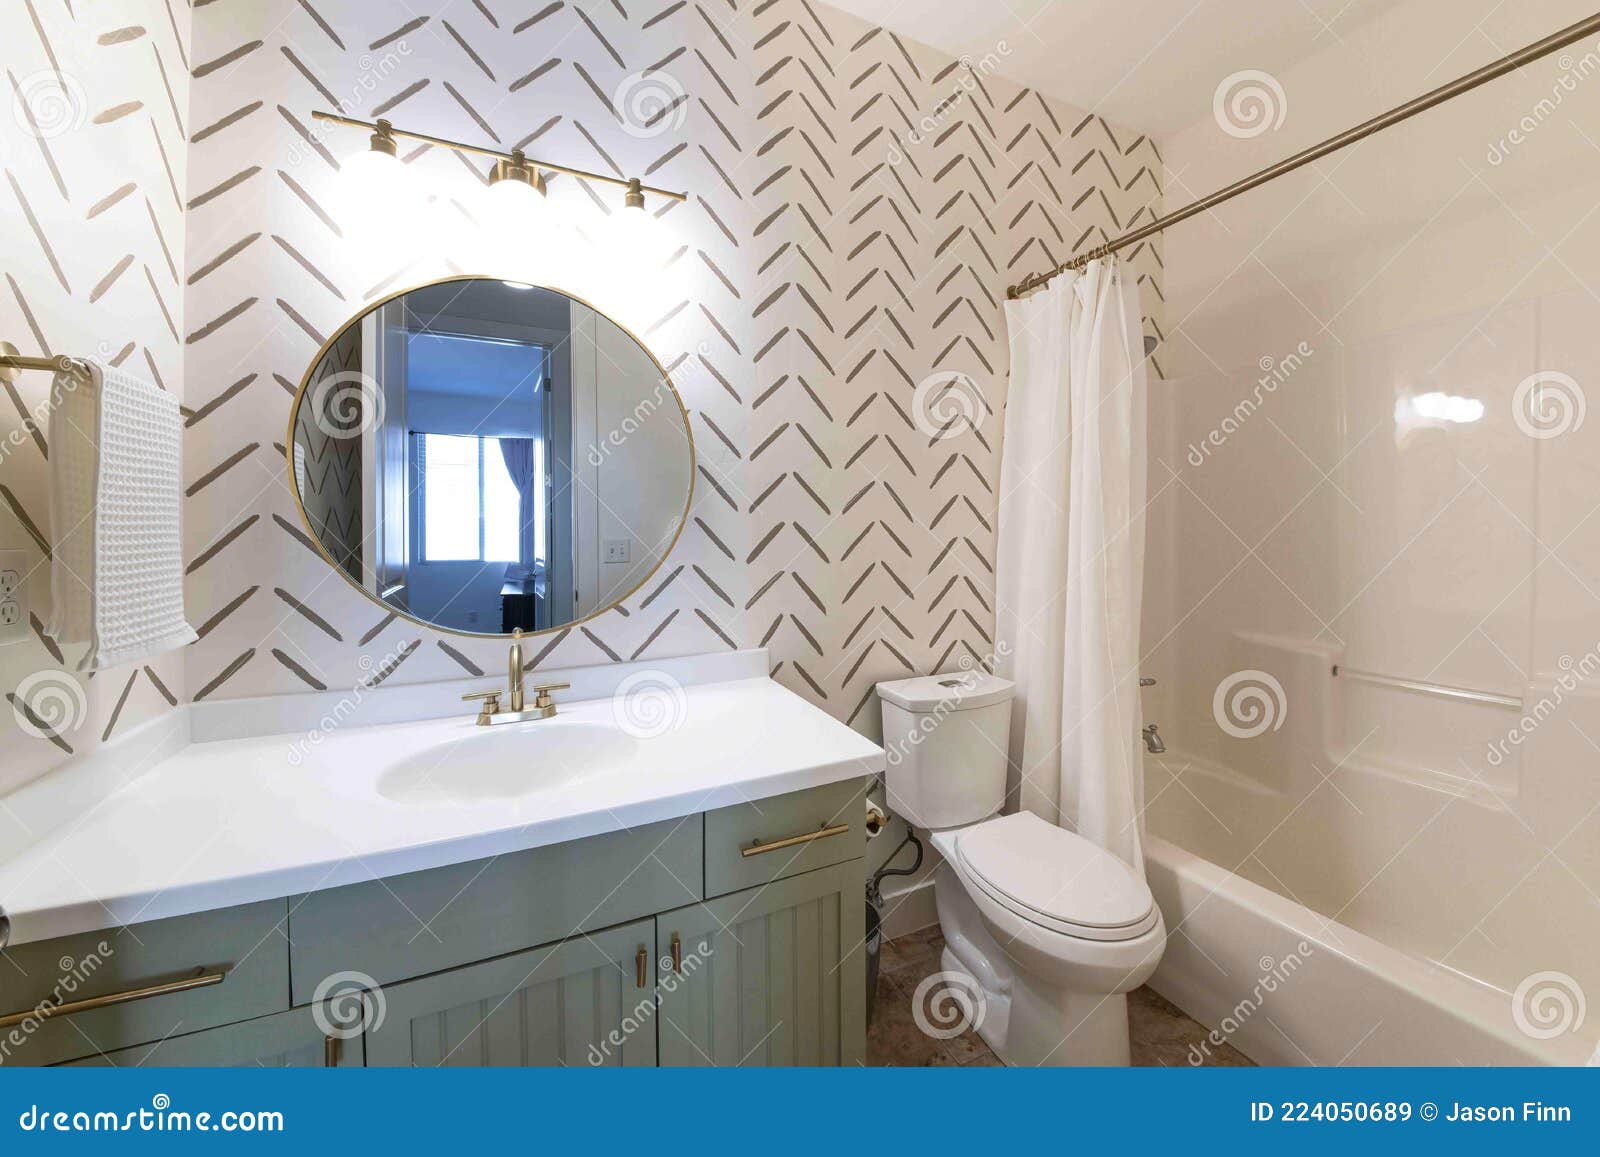 Small Bathroom Interior with Minimalist Wallpaper Design Stock Image ...